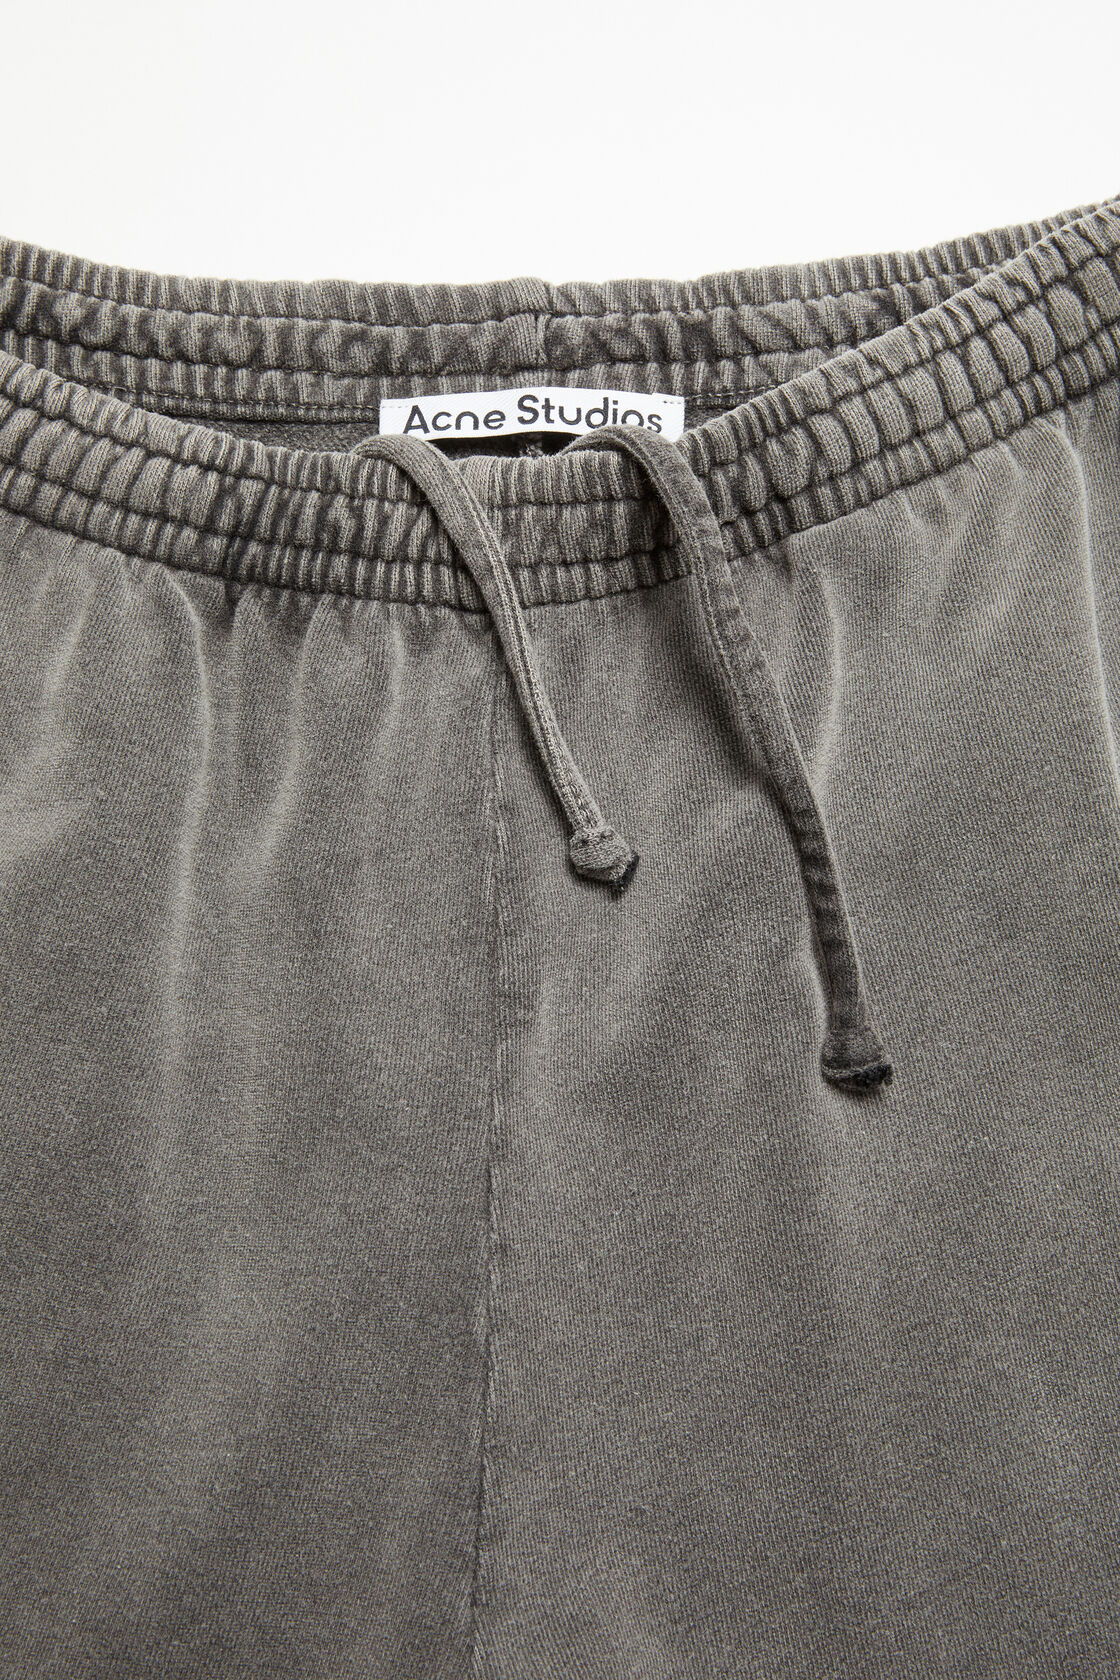 ACNE STUDIOS Vintage Sweatpant in Faded Black XL